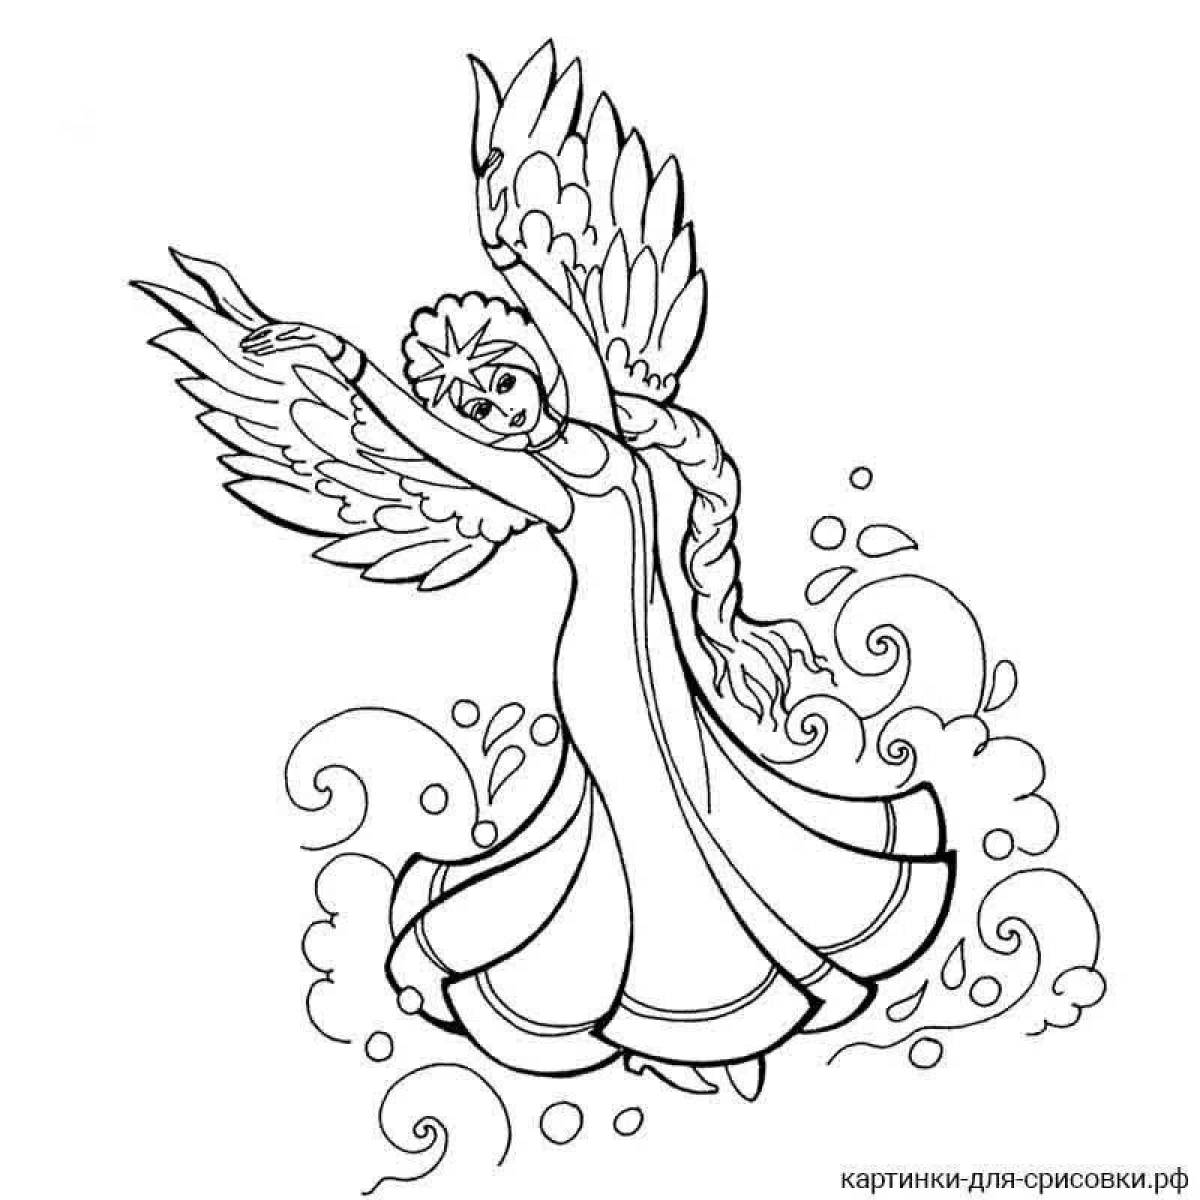 Раскраска Царевна лебедь из сказки о царе Салтане